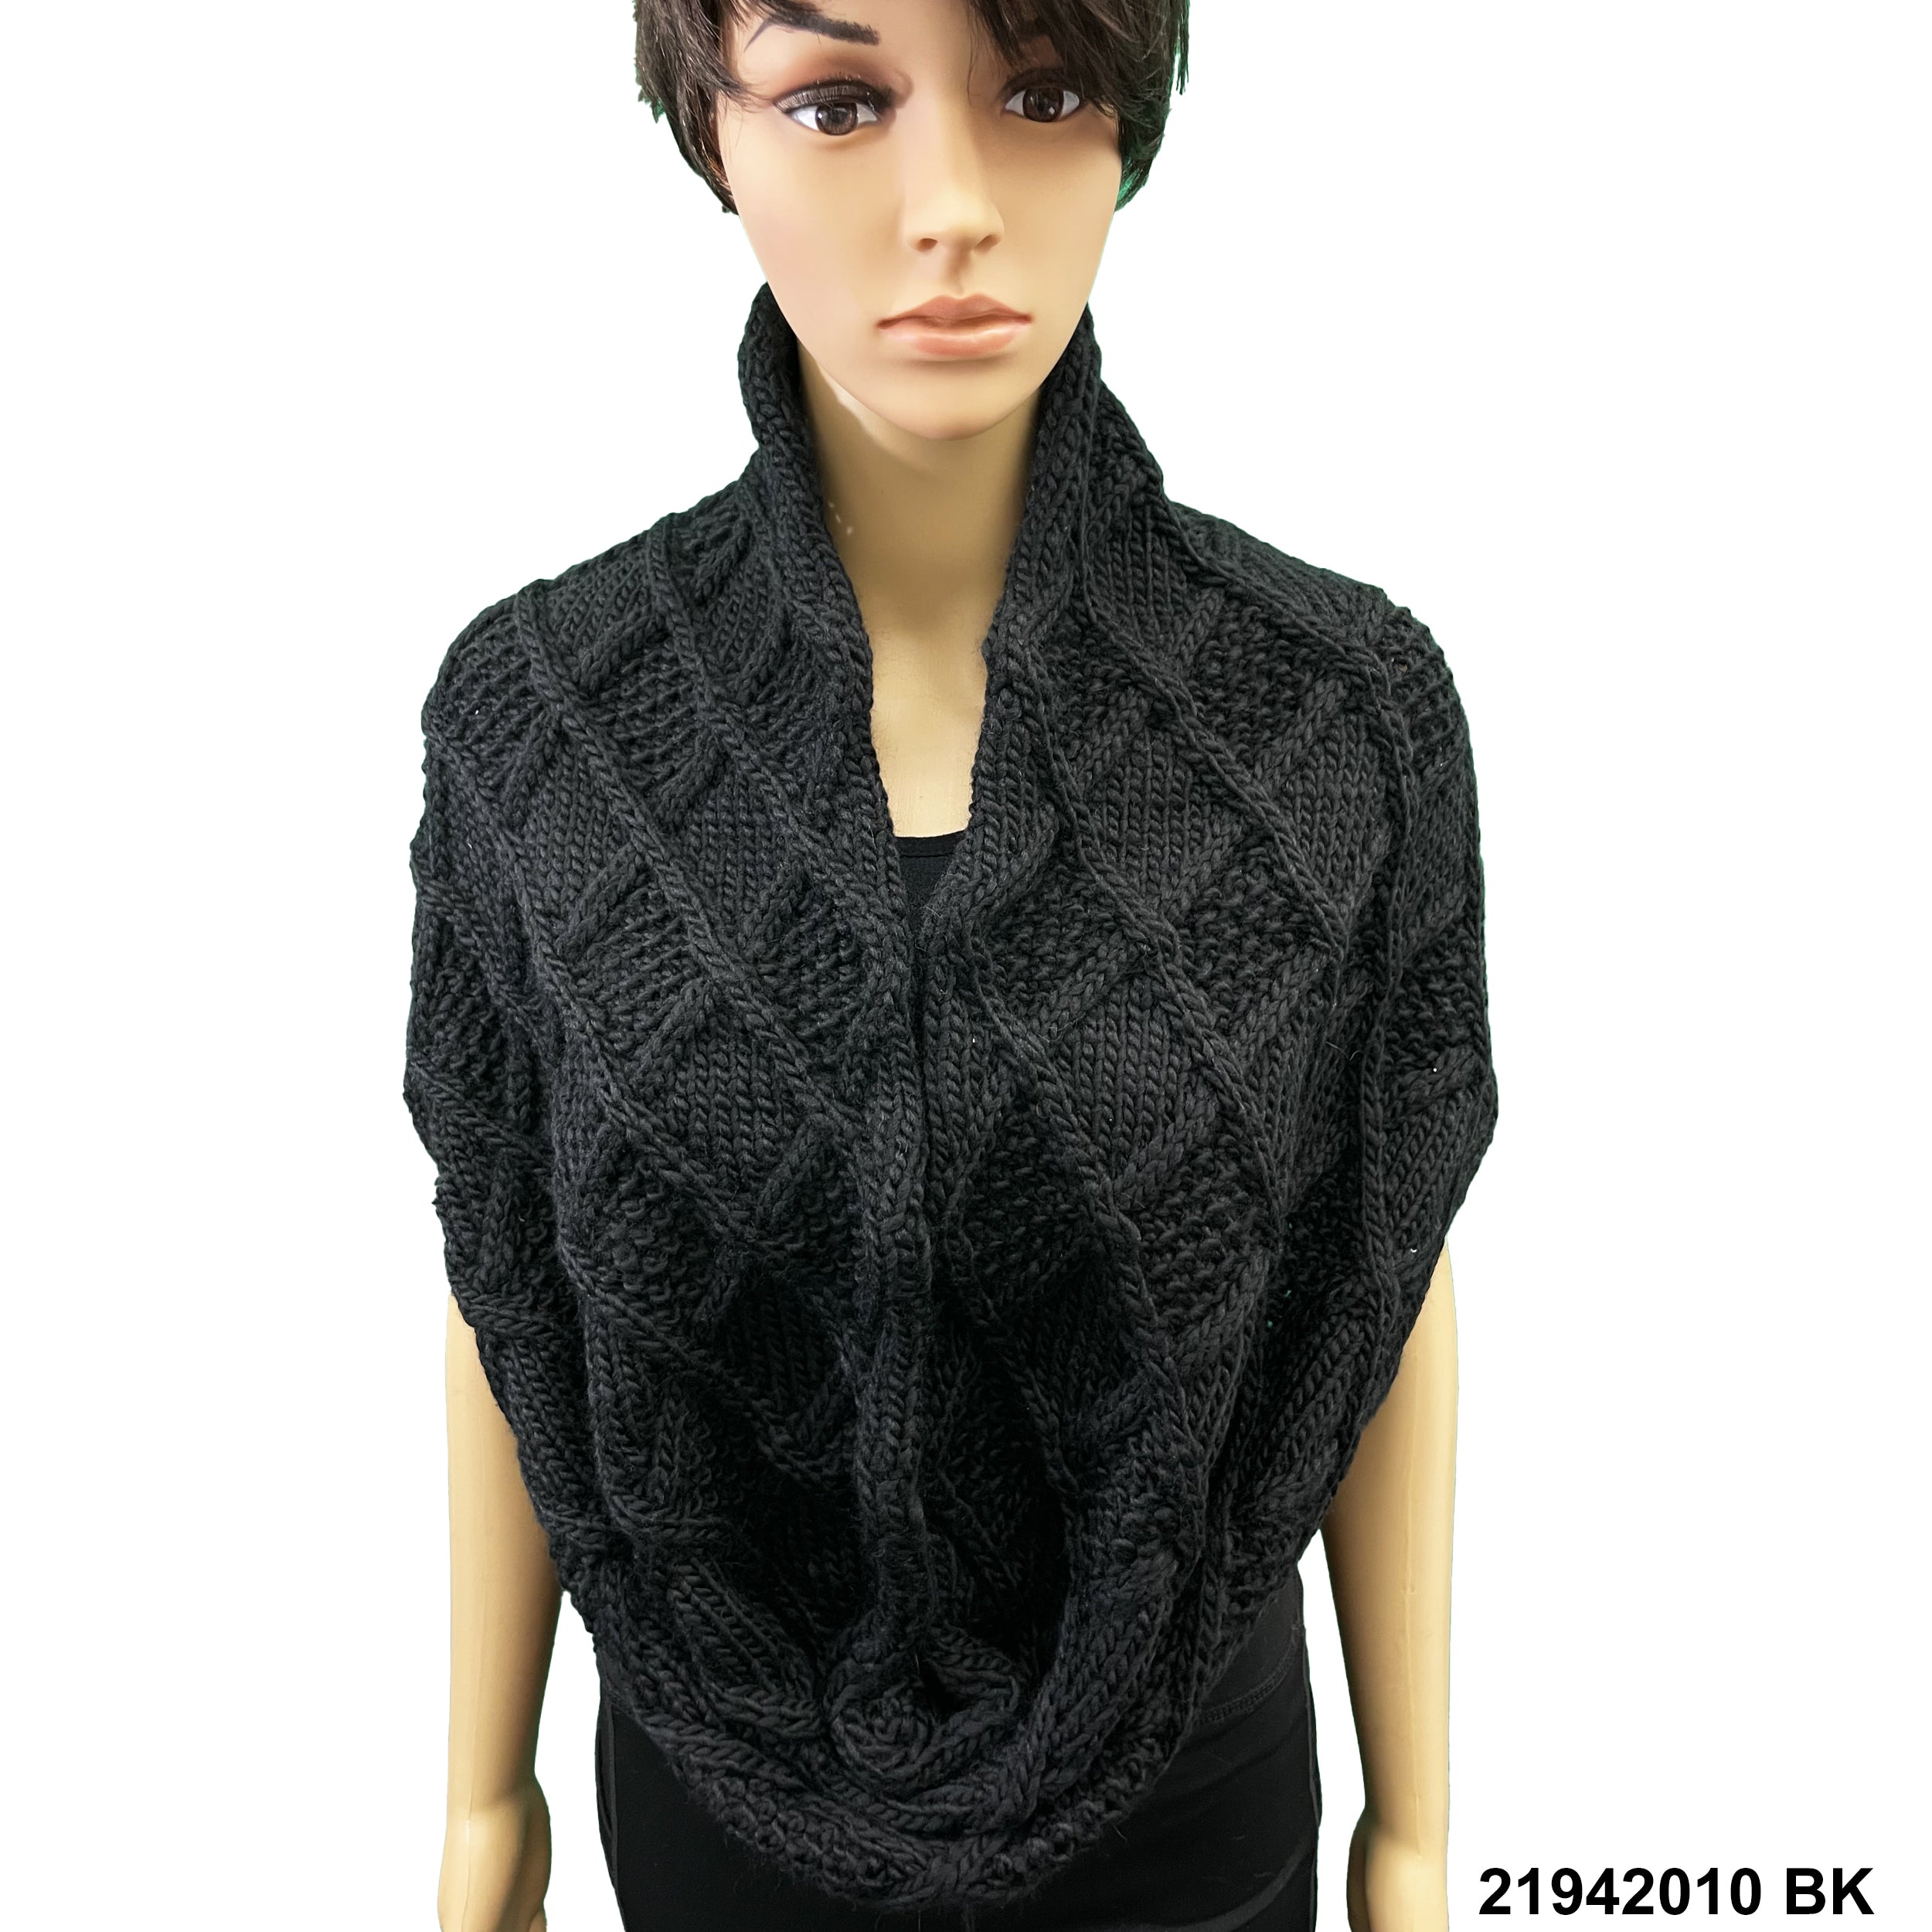 Knitted Wool Infinity Leaf Scarf 21942010 BK